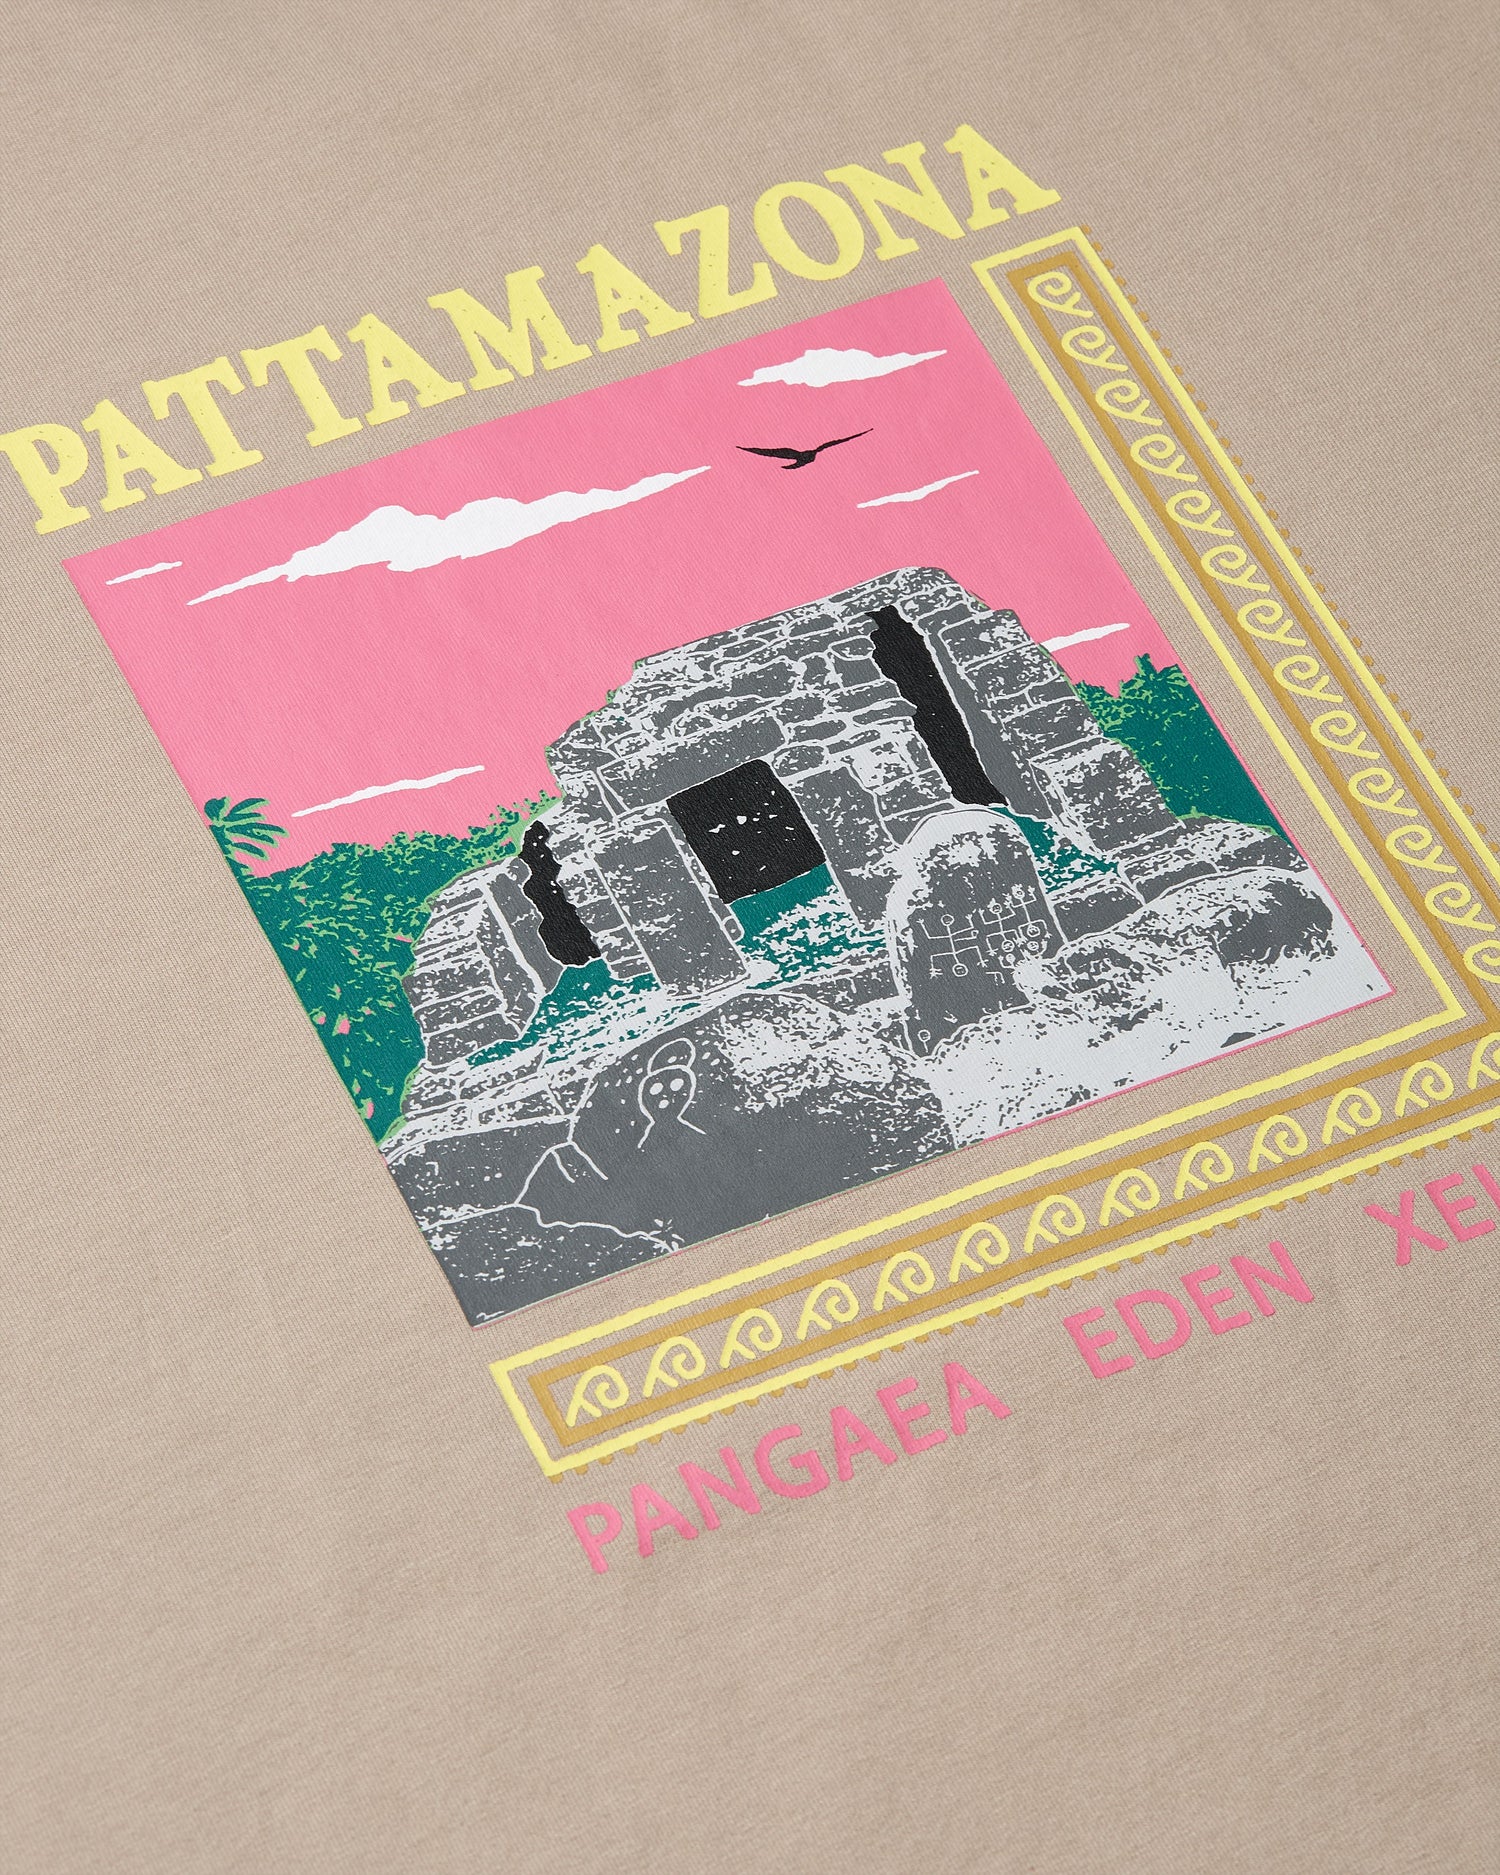 Patta Pattamazona T-Shirt (Goat)